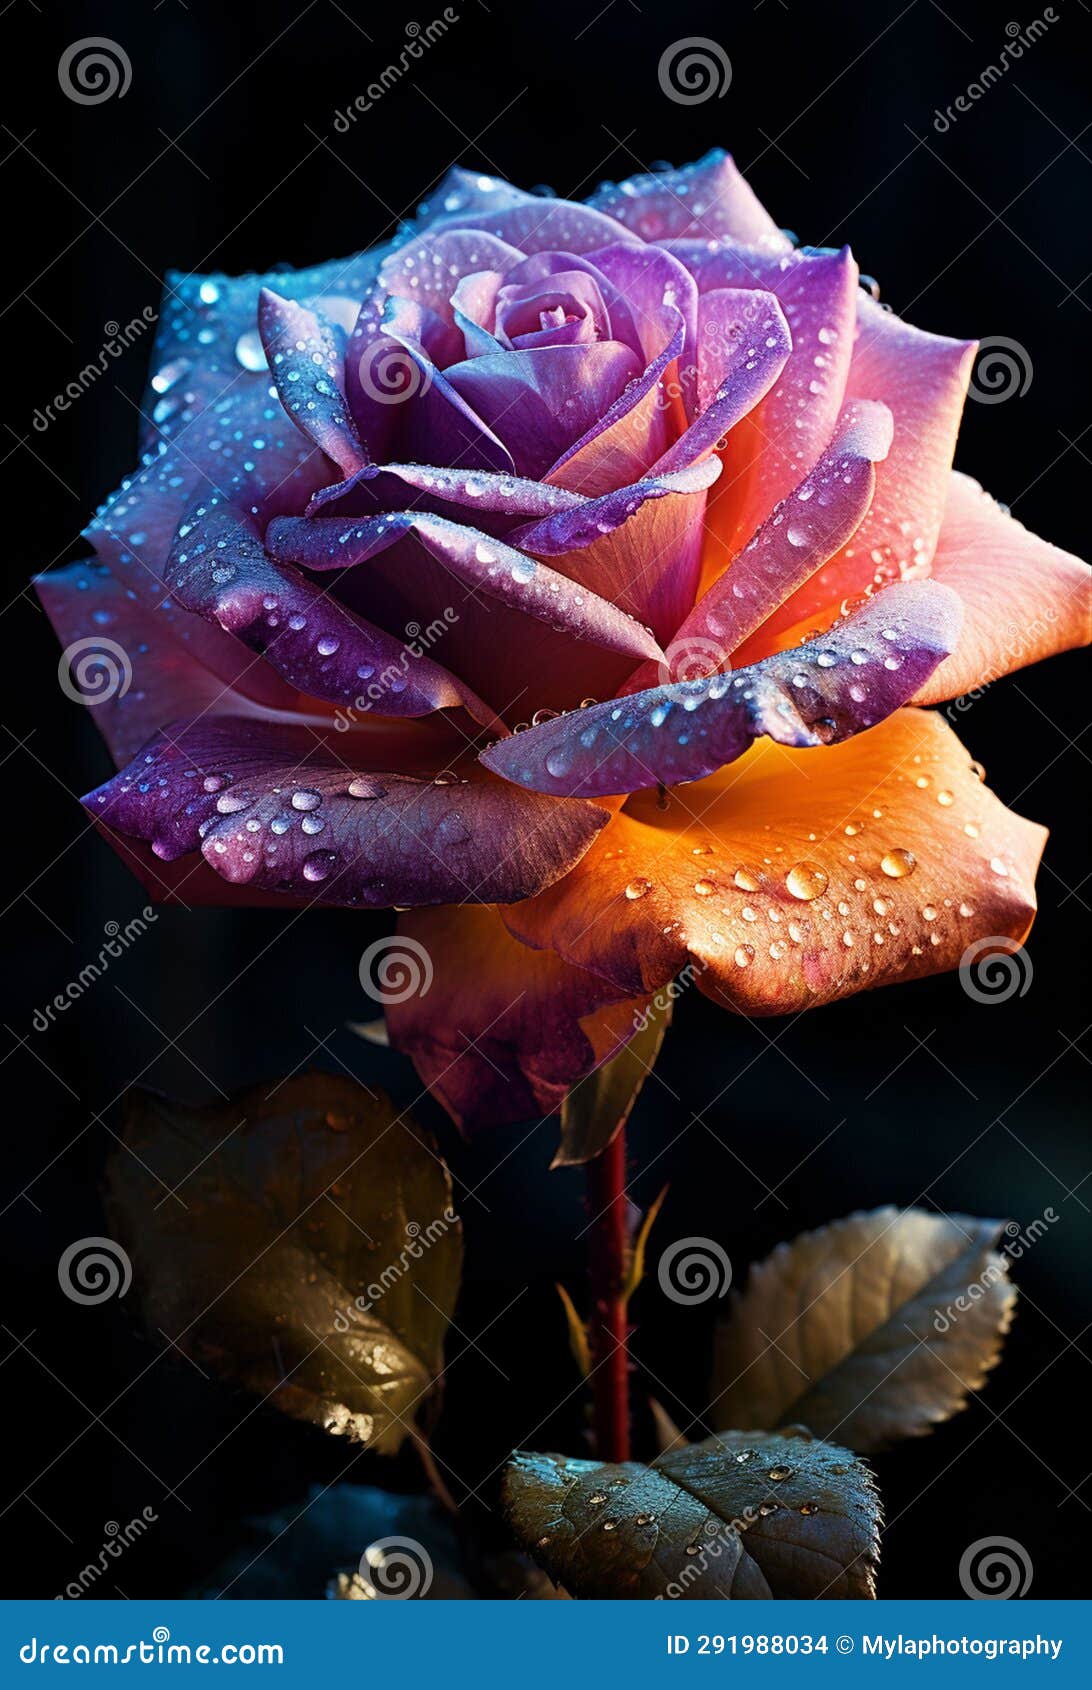 macro shot of a pink rose, uhd coloring